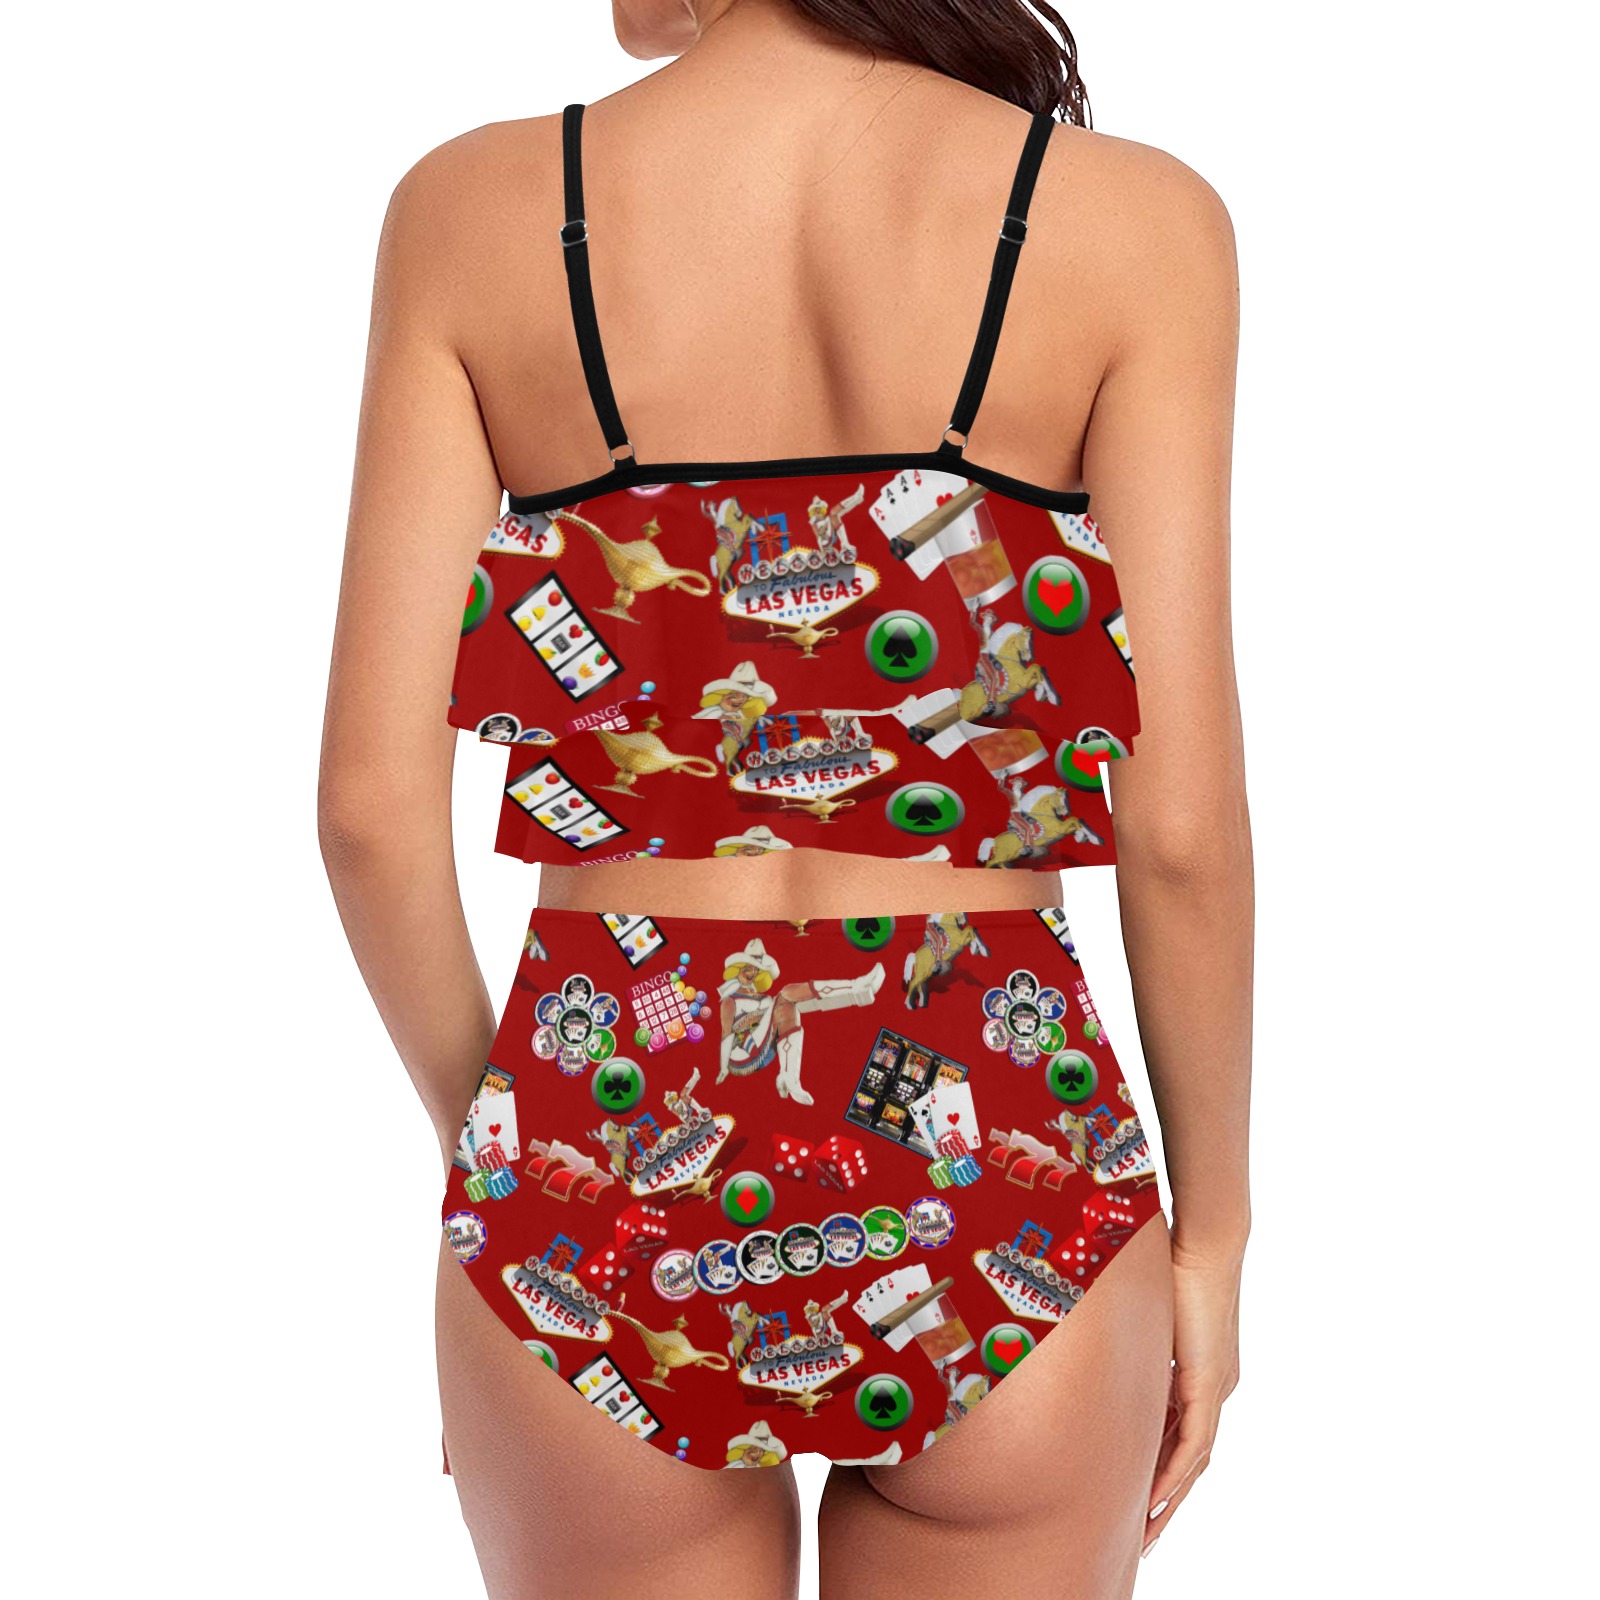 Las Vegas Gamblers Delight - Red High Waisted Double Ruffle Bikini Set (Model S34)